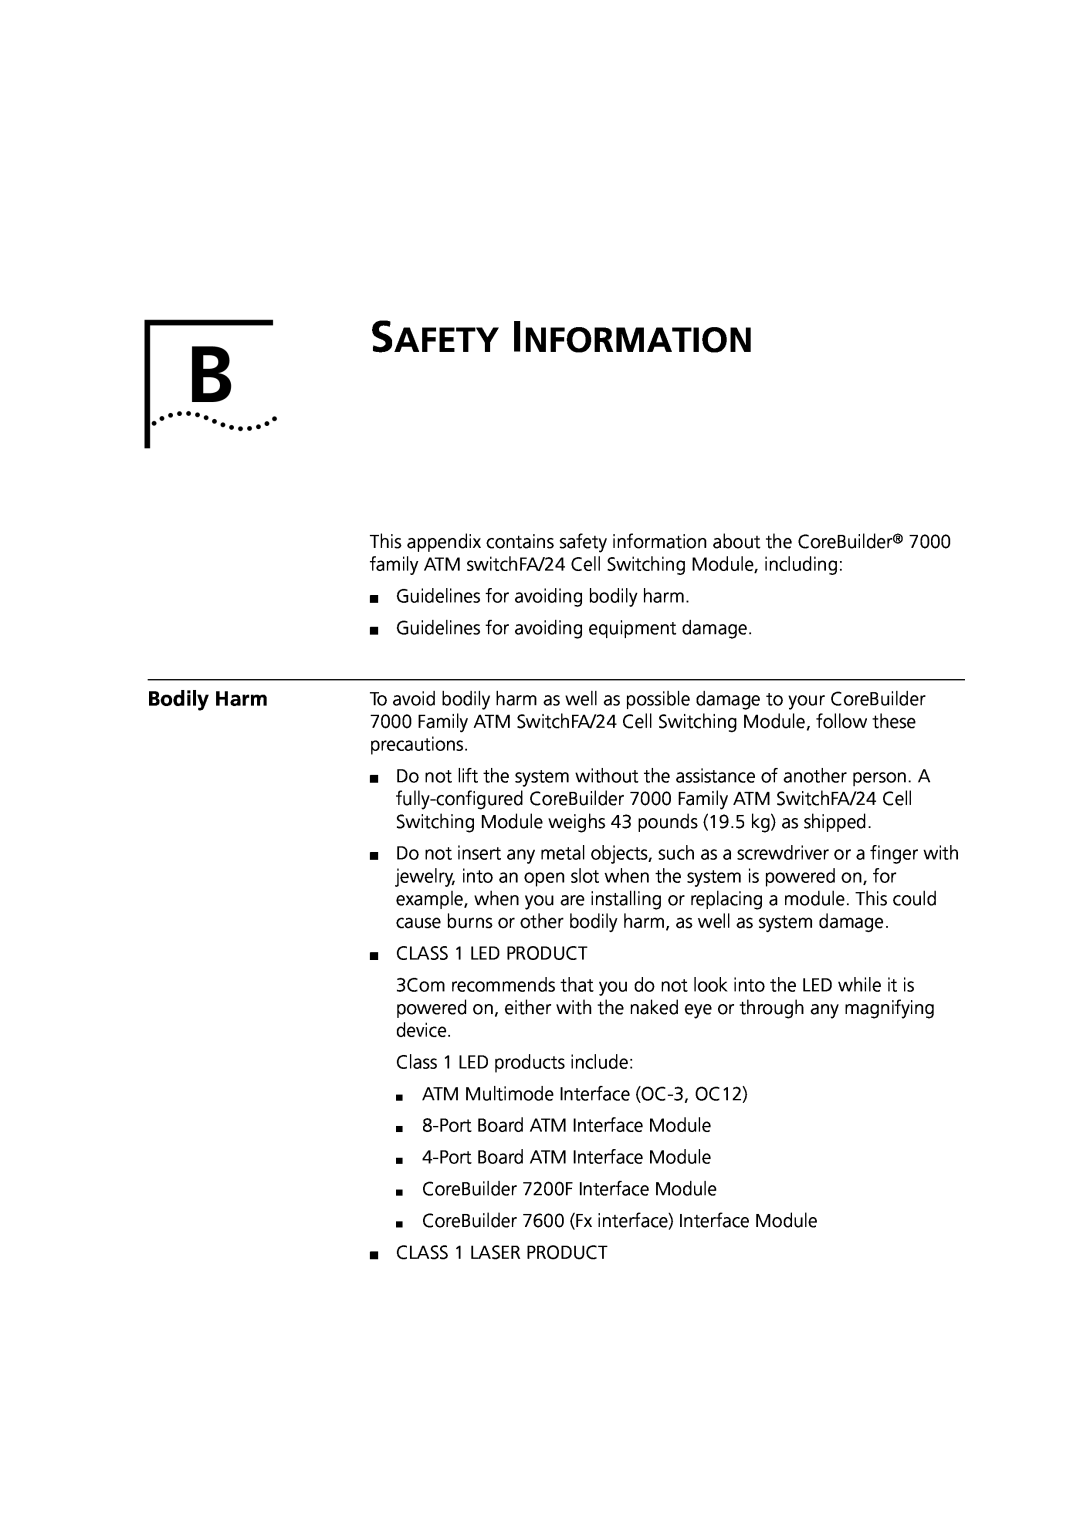 3Com 7000 manual Safety Information, Bodily Harm 